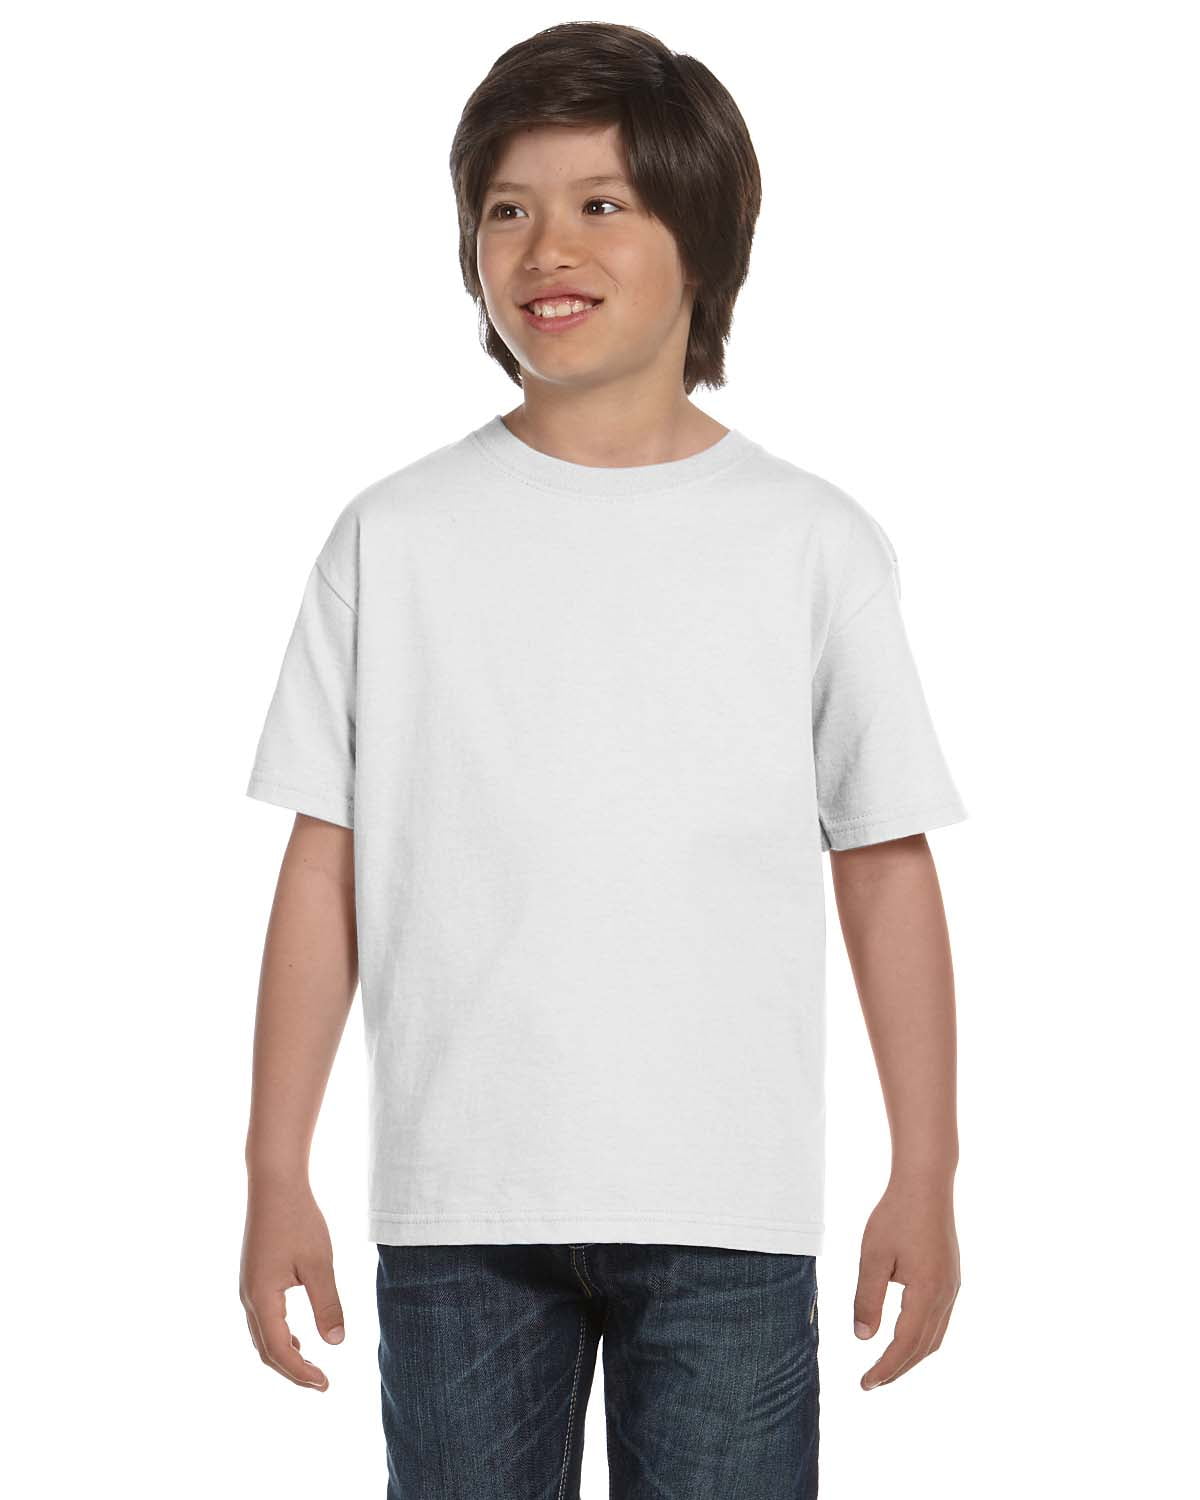 White Youth T Shirts